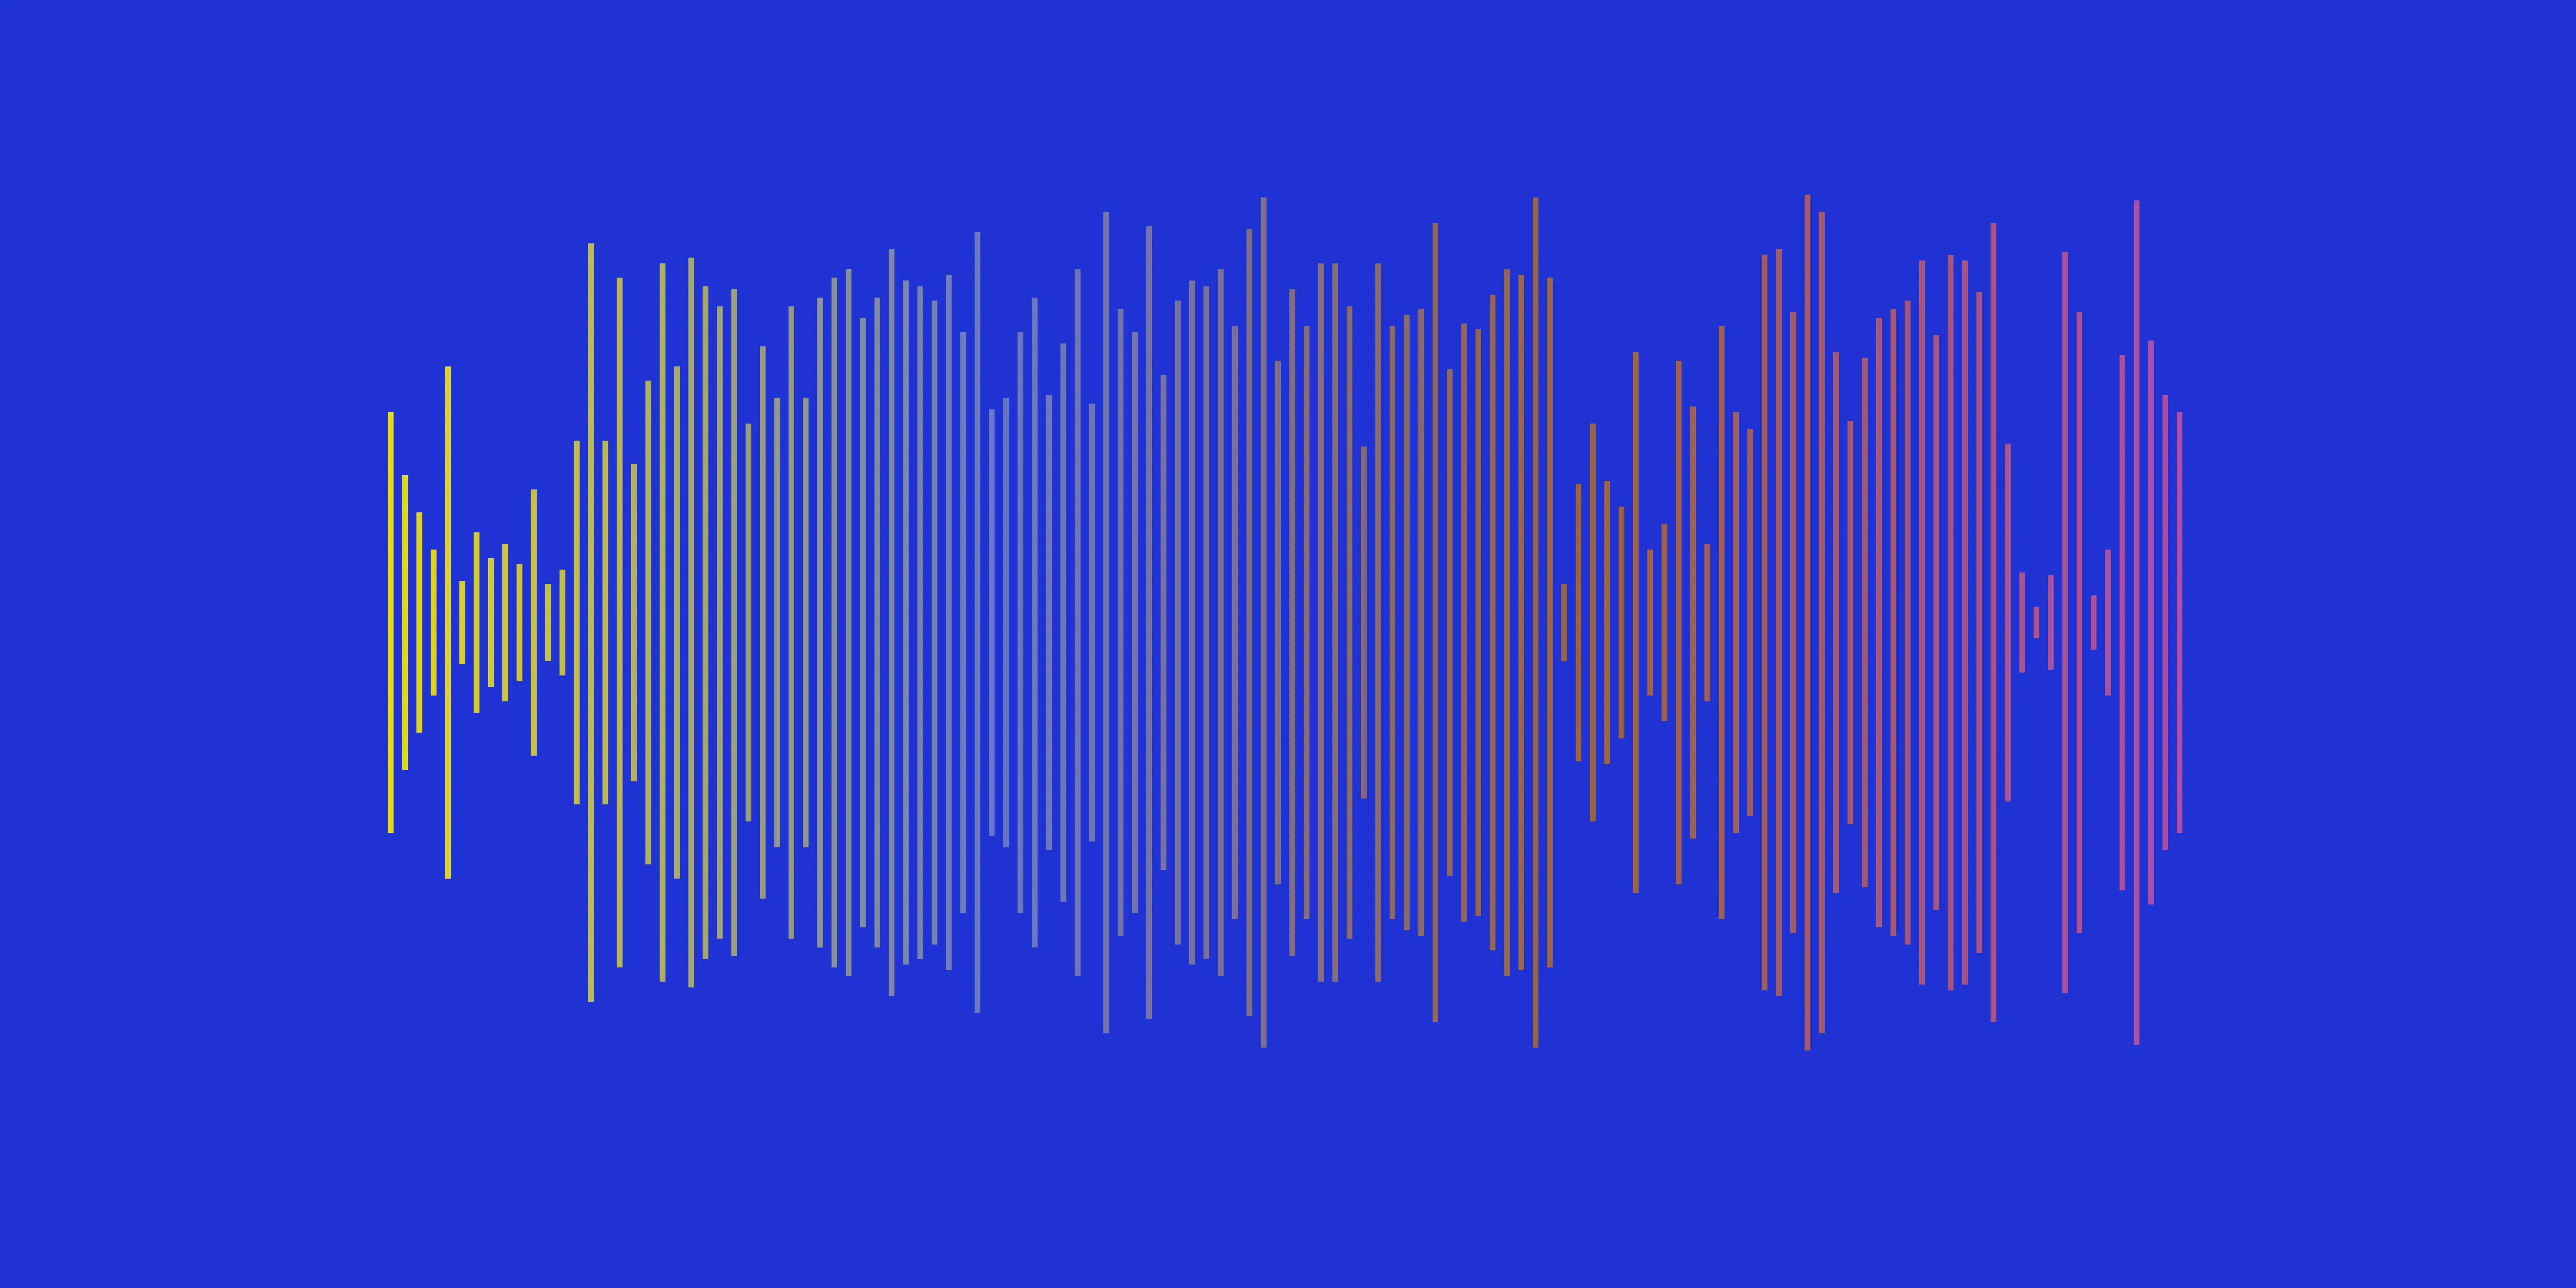 Sound Wave Generator - Create a Sound Wave Art